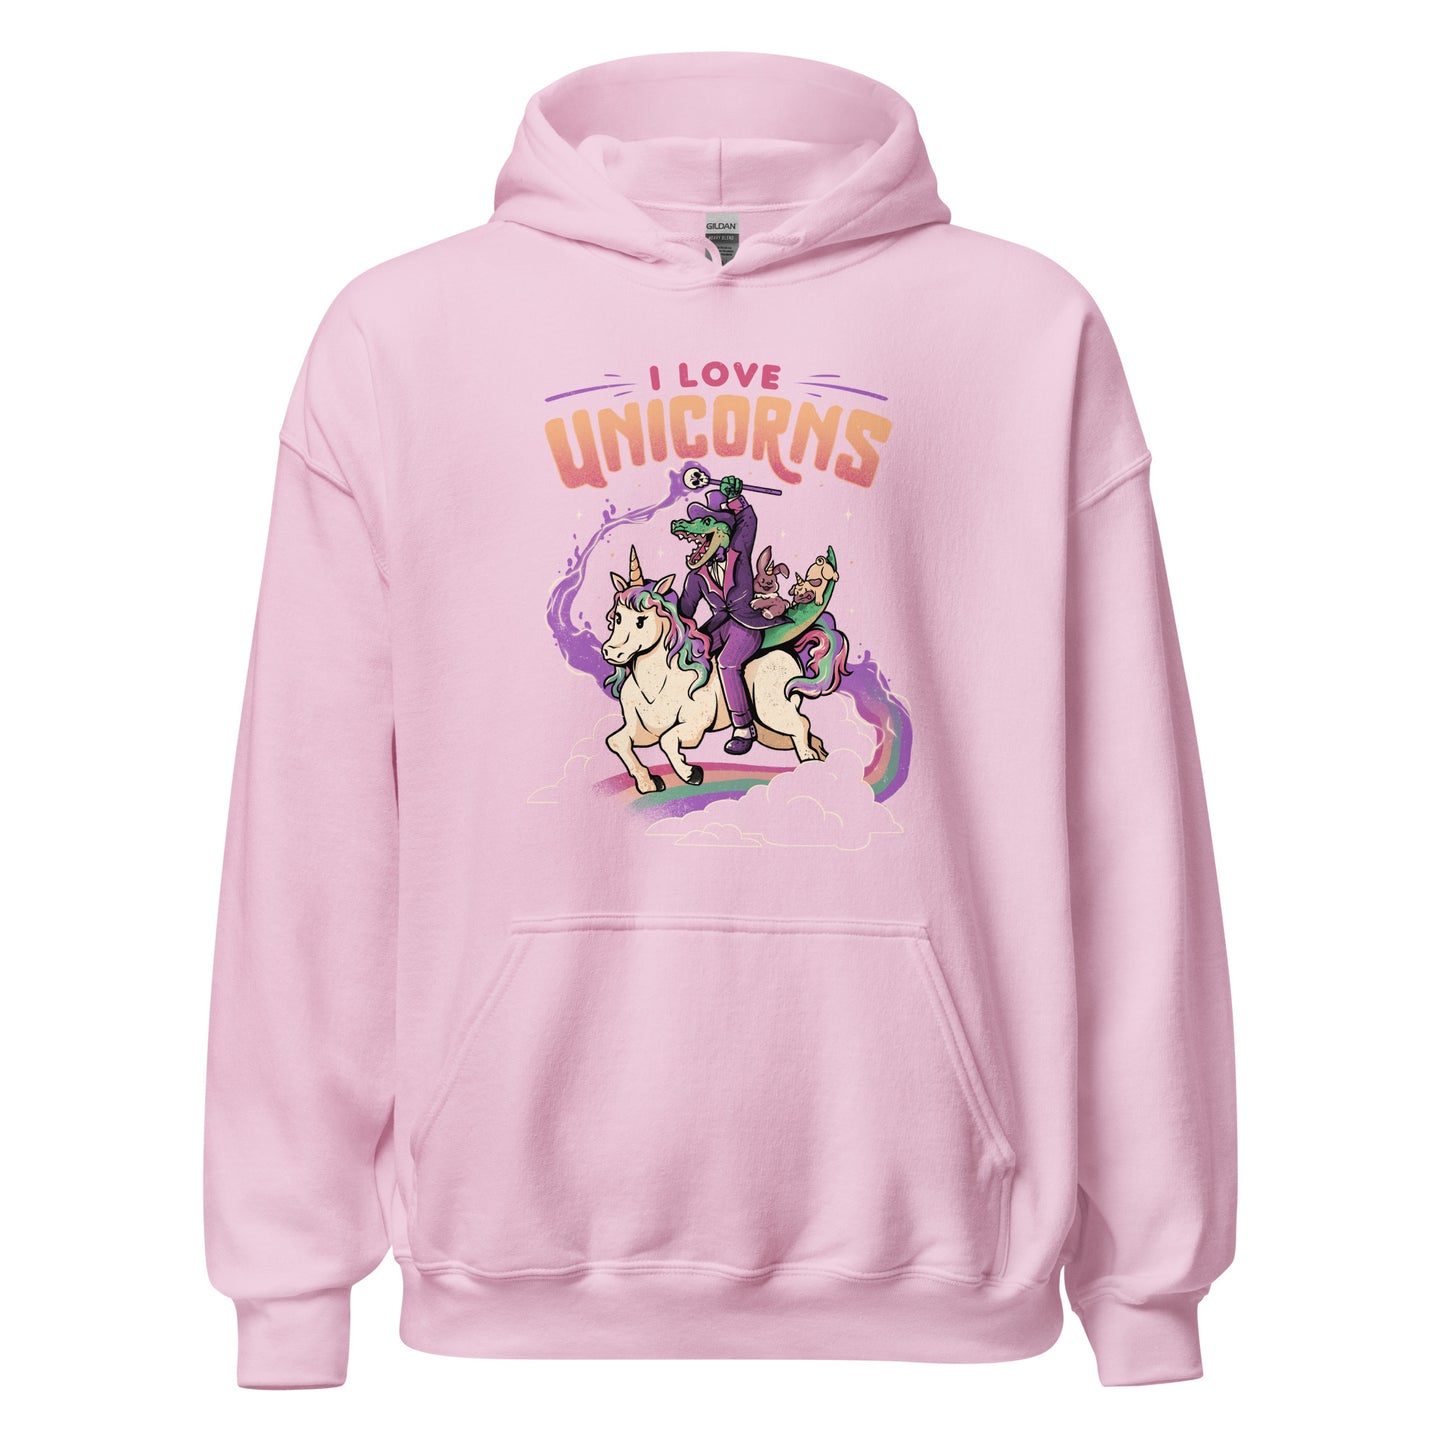 I Love Unicorns - Hoodie